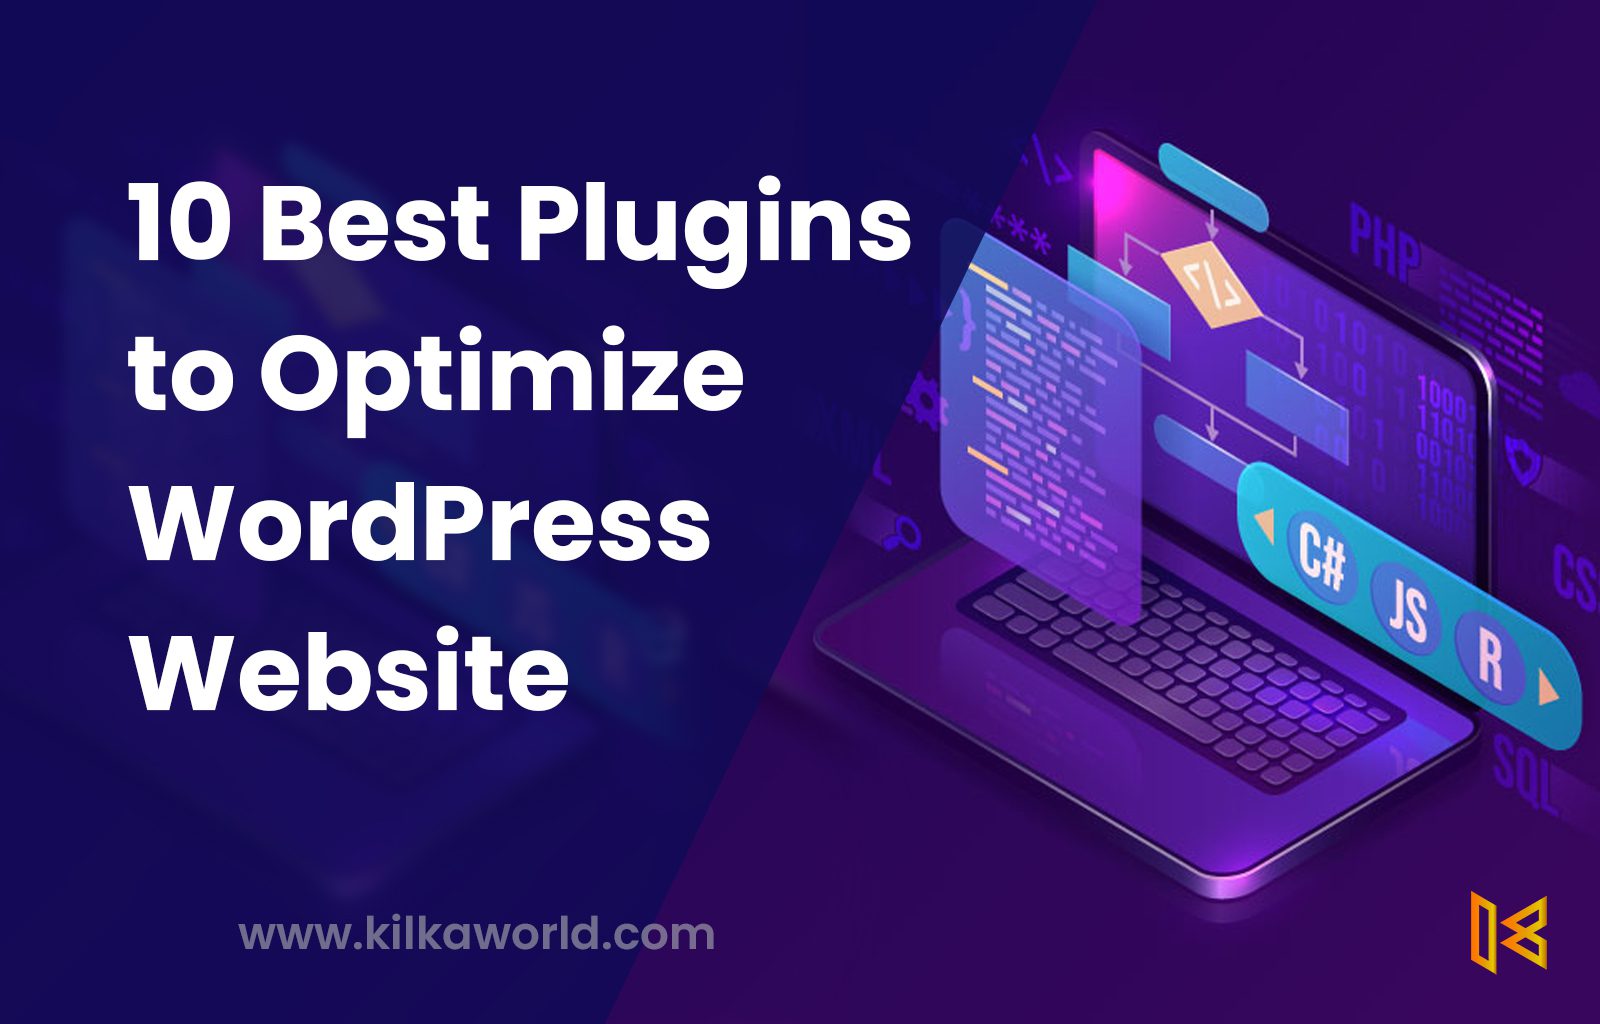 10 Best Plugins to Optimize WordPress Website, Best Web Hosting